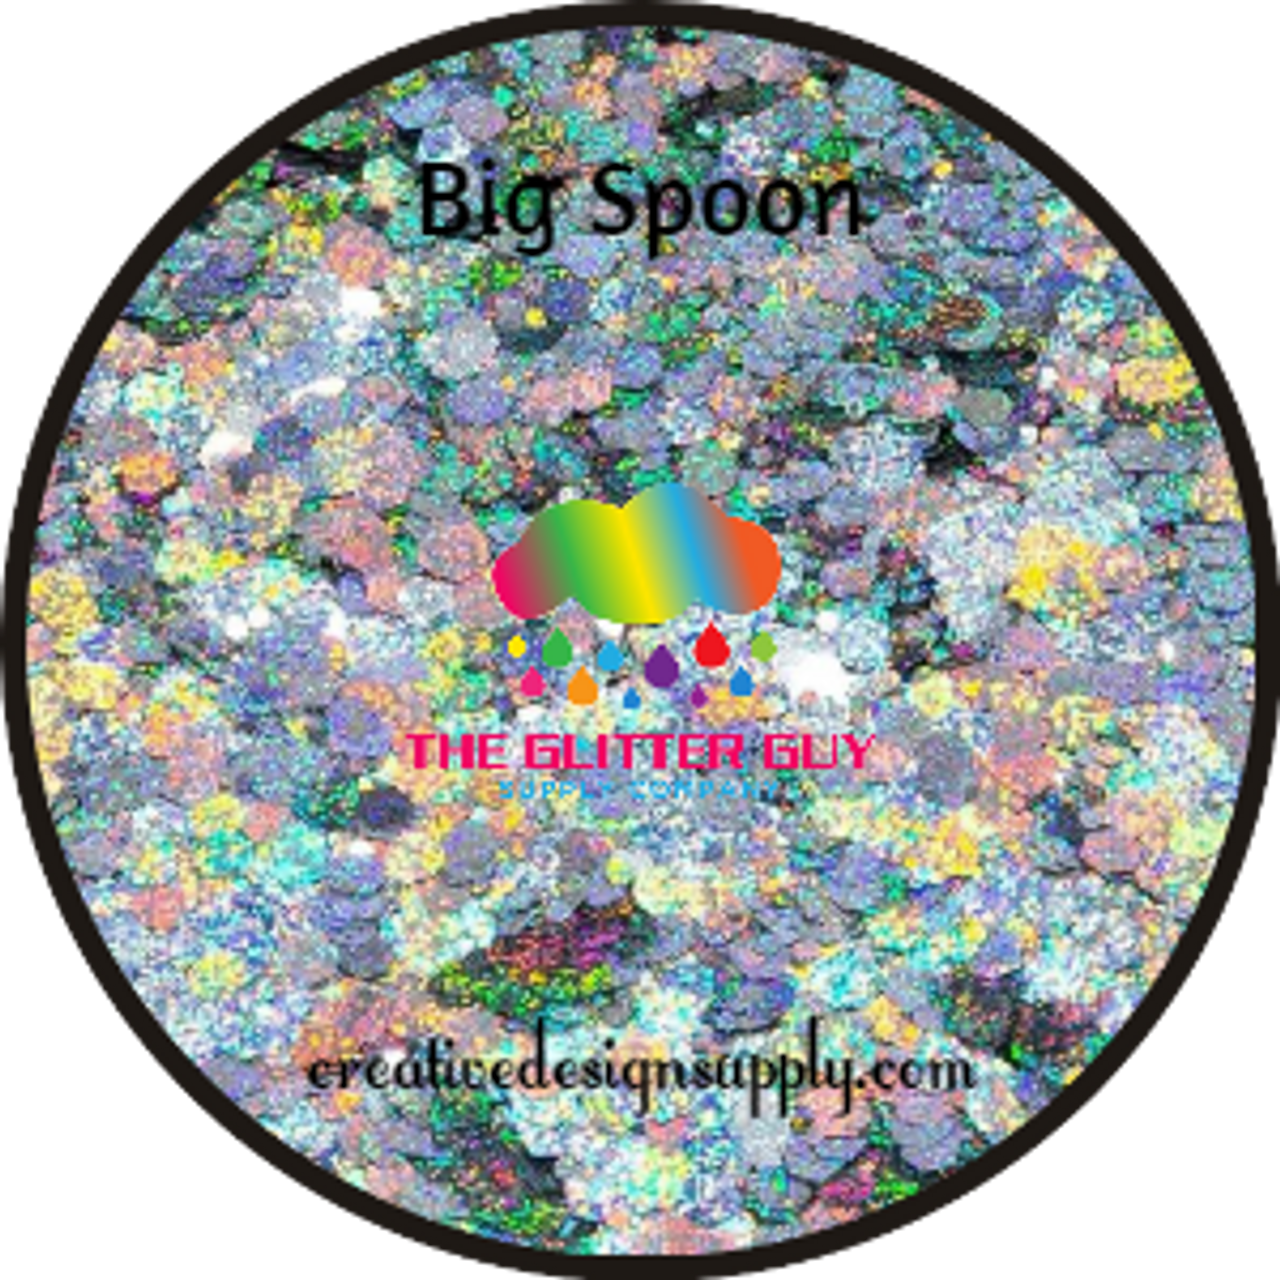 The Glitter Guy | Big Spoon